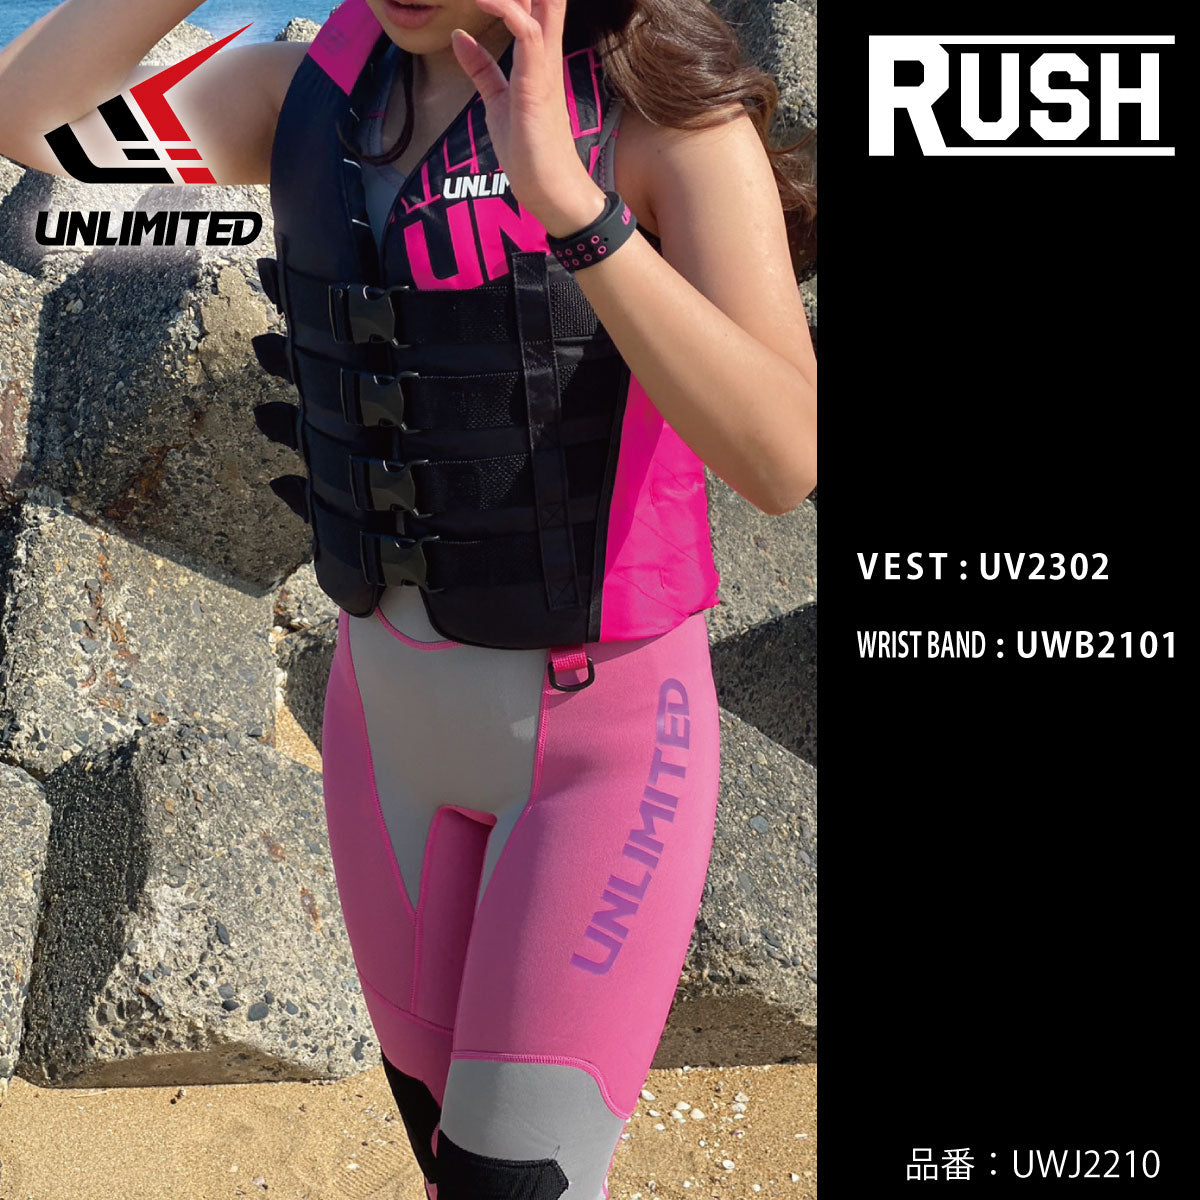 UNLIMITED RUSH  ロングジョン  ウェットスーツ メンズ 水上バイク ジェットスキー パッド付 マリンスポーツ アンリミテッド UWJ2210